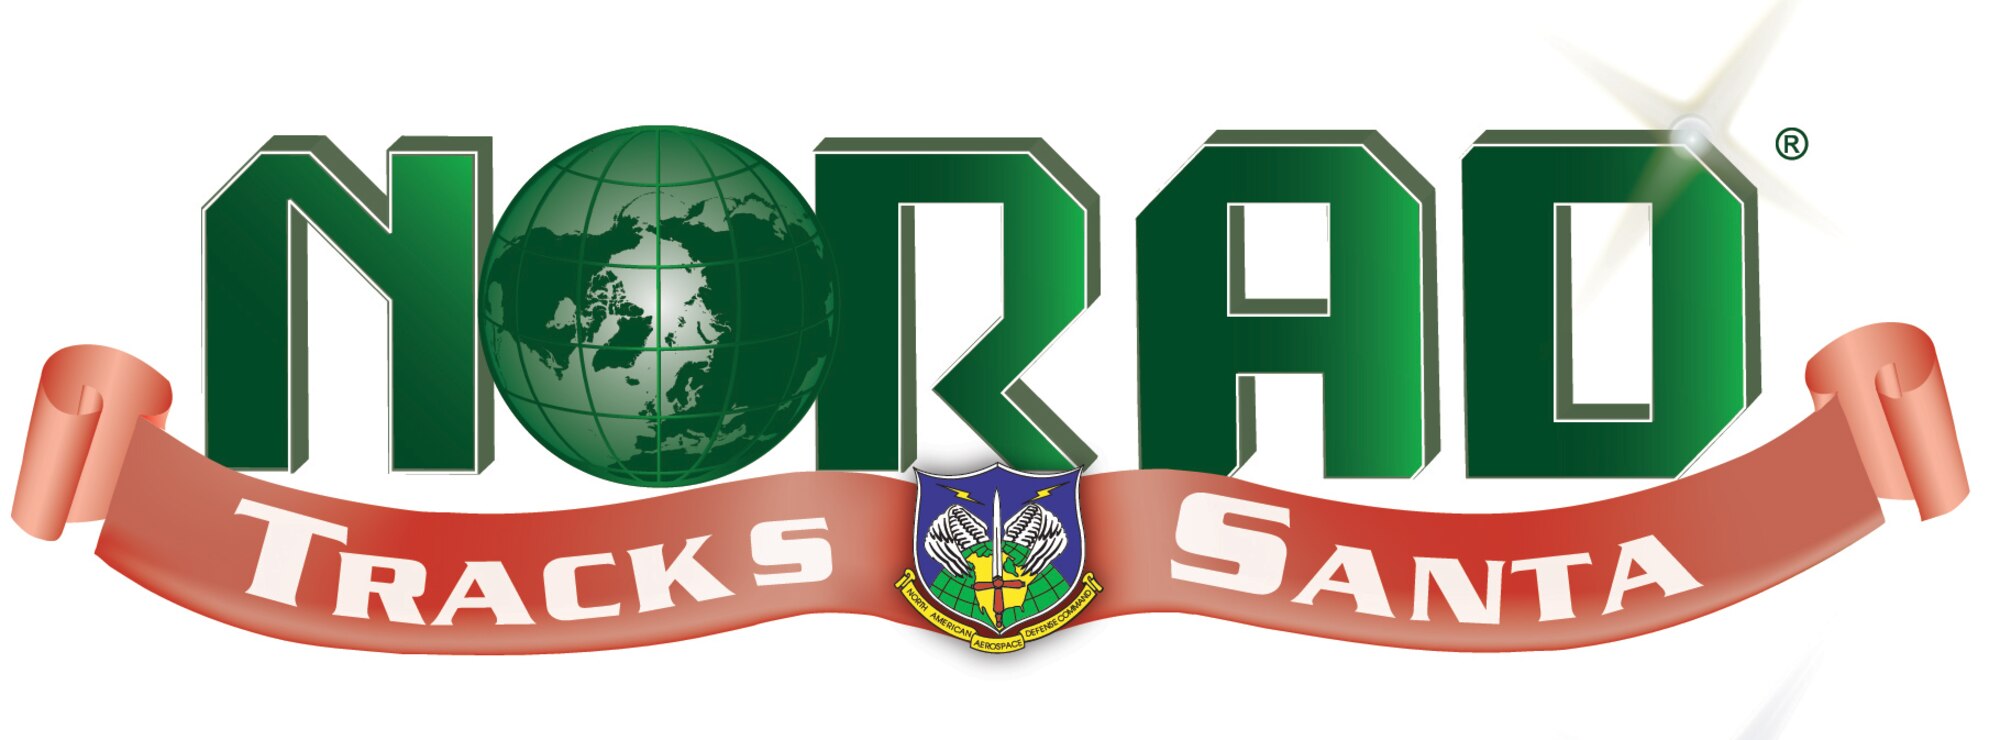 NORAD Tracks SANTA logo